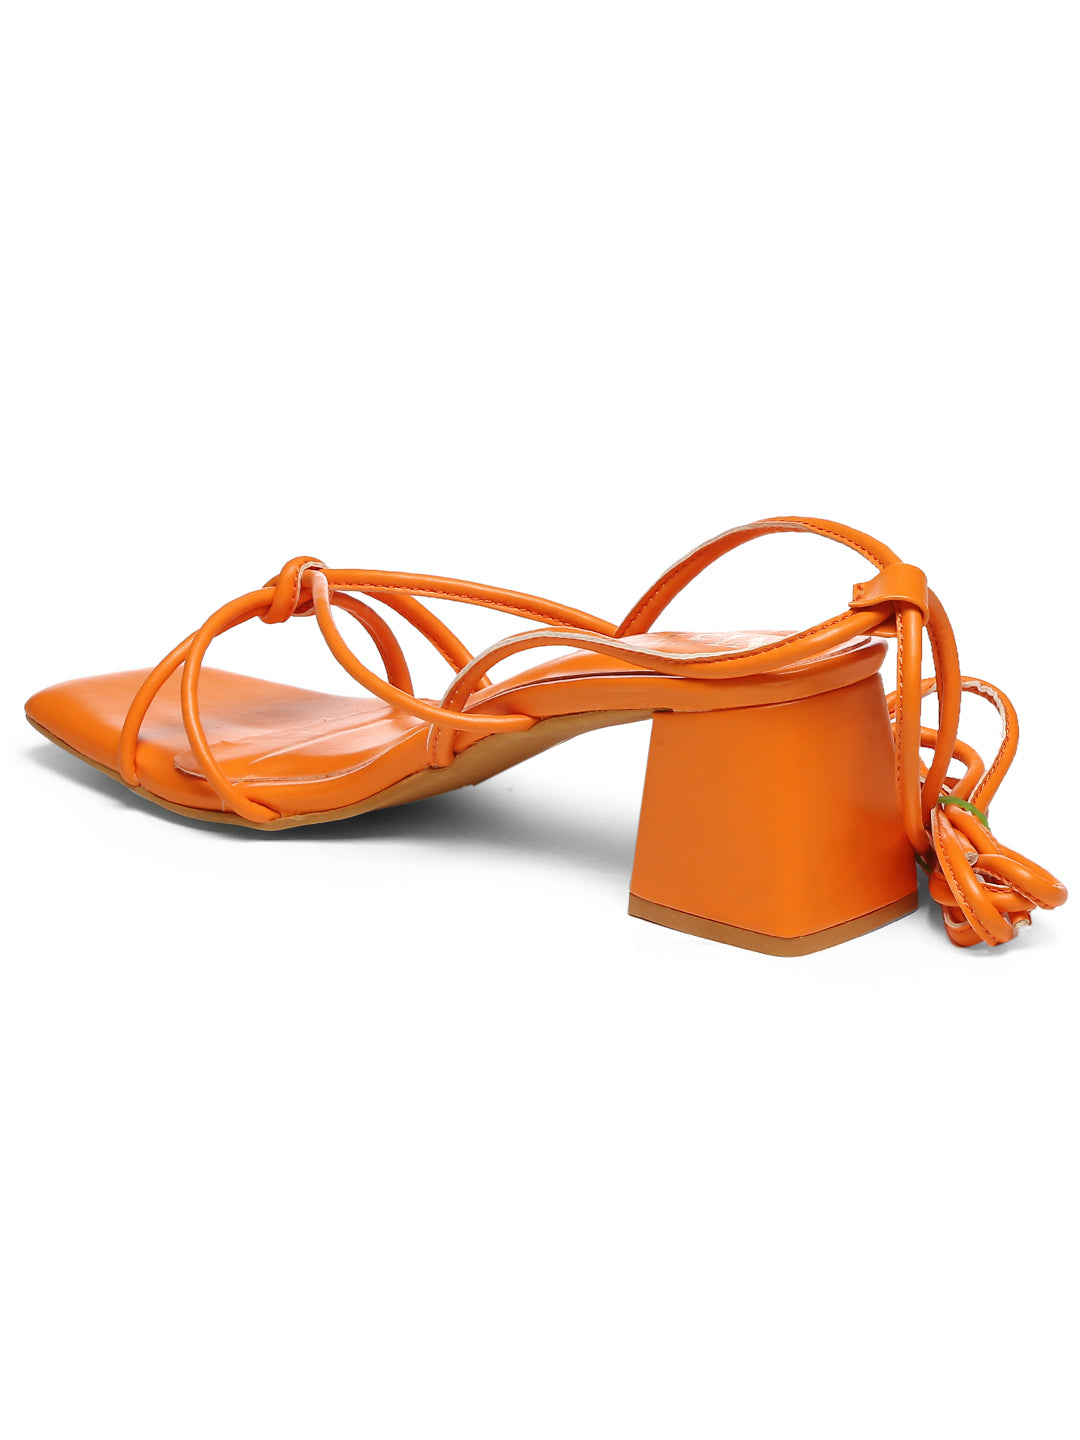 GNIST Orange Strappy Tie up  Block Heel Sandal